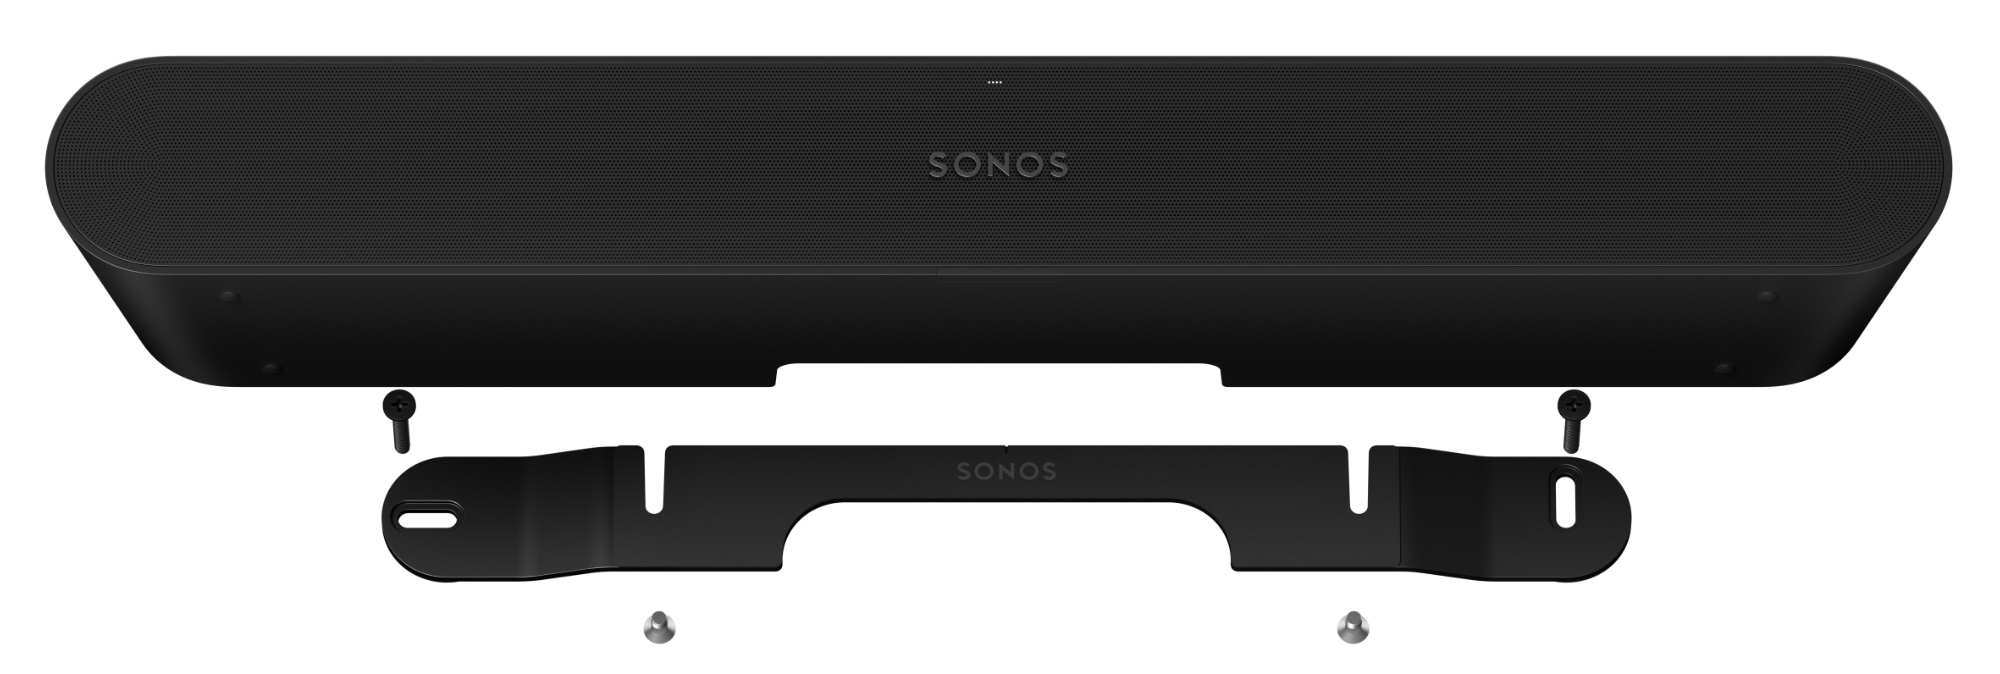 Sonos Ray czarny z montażem na ścianę